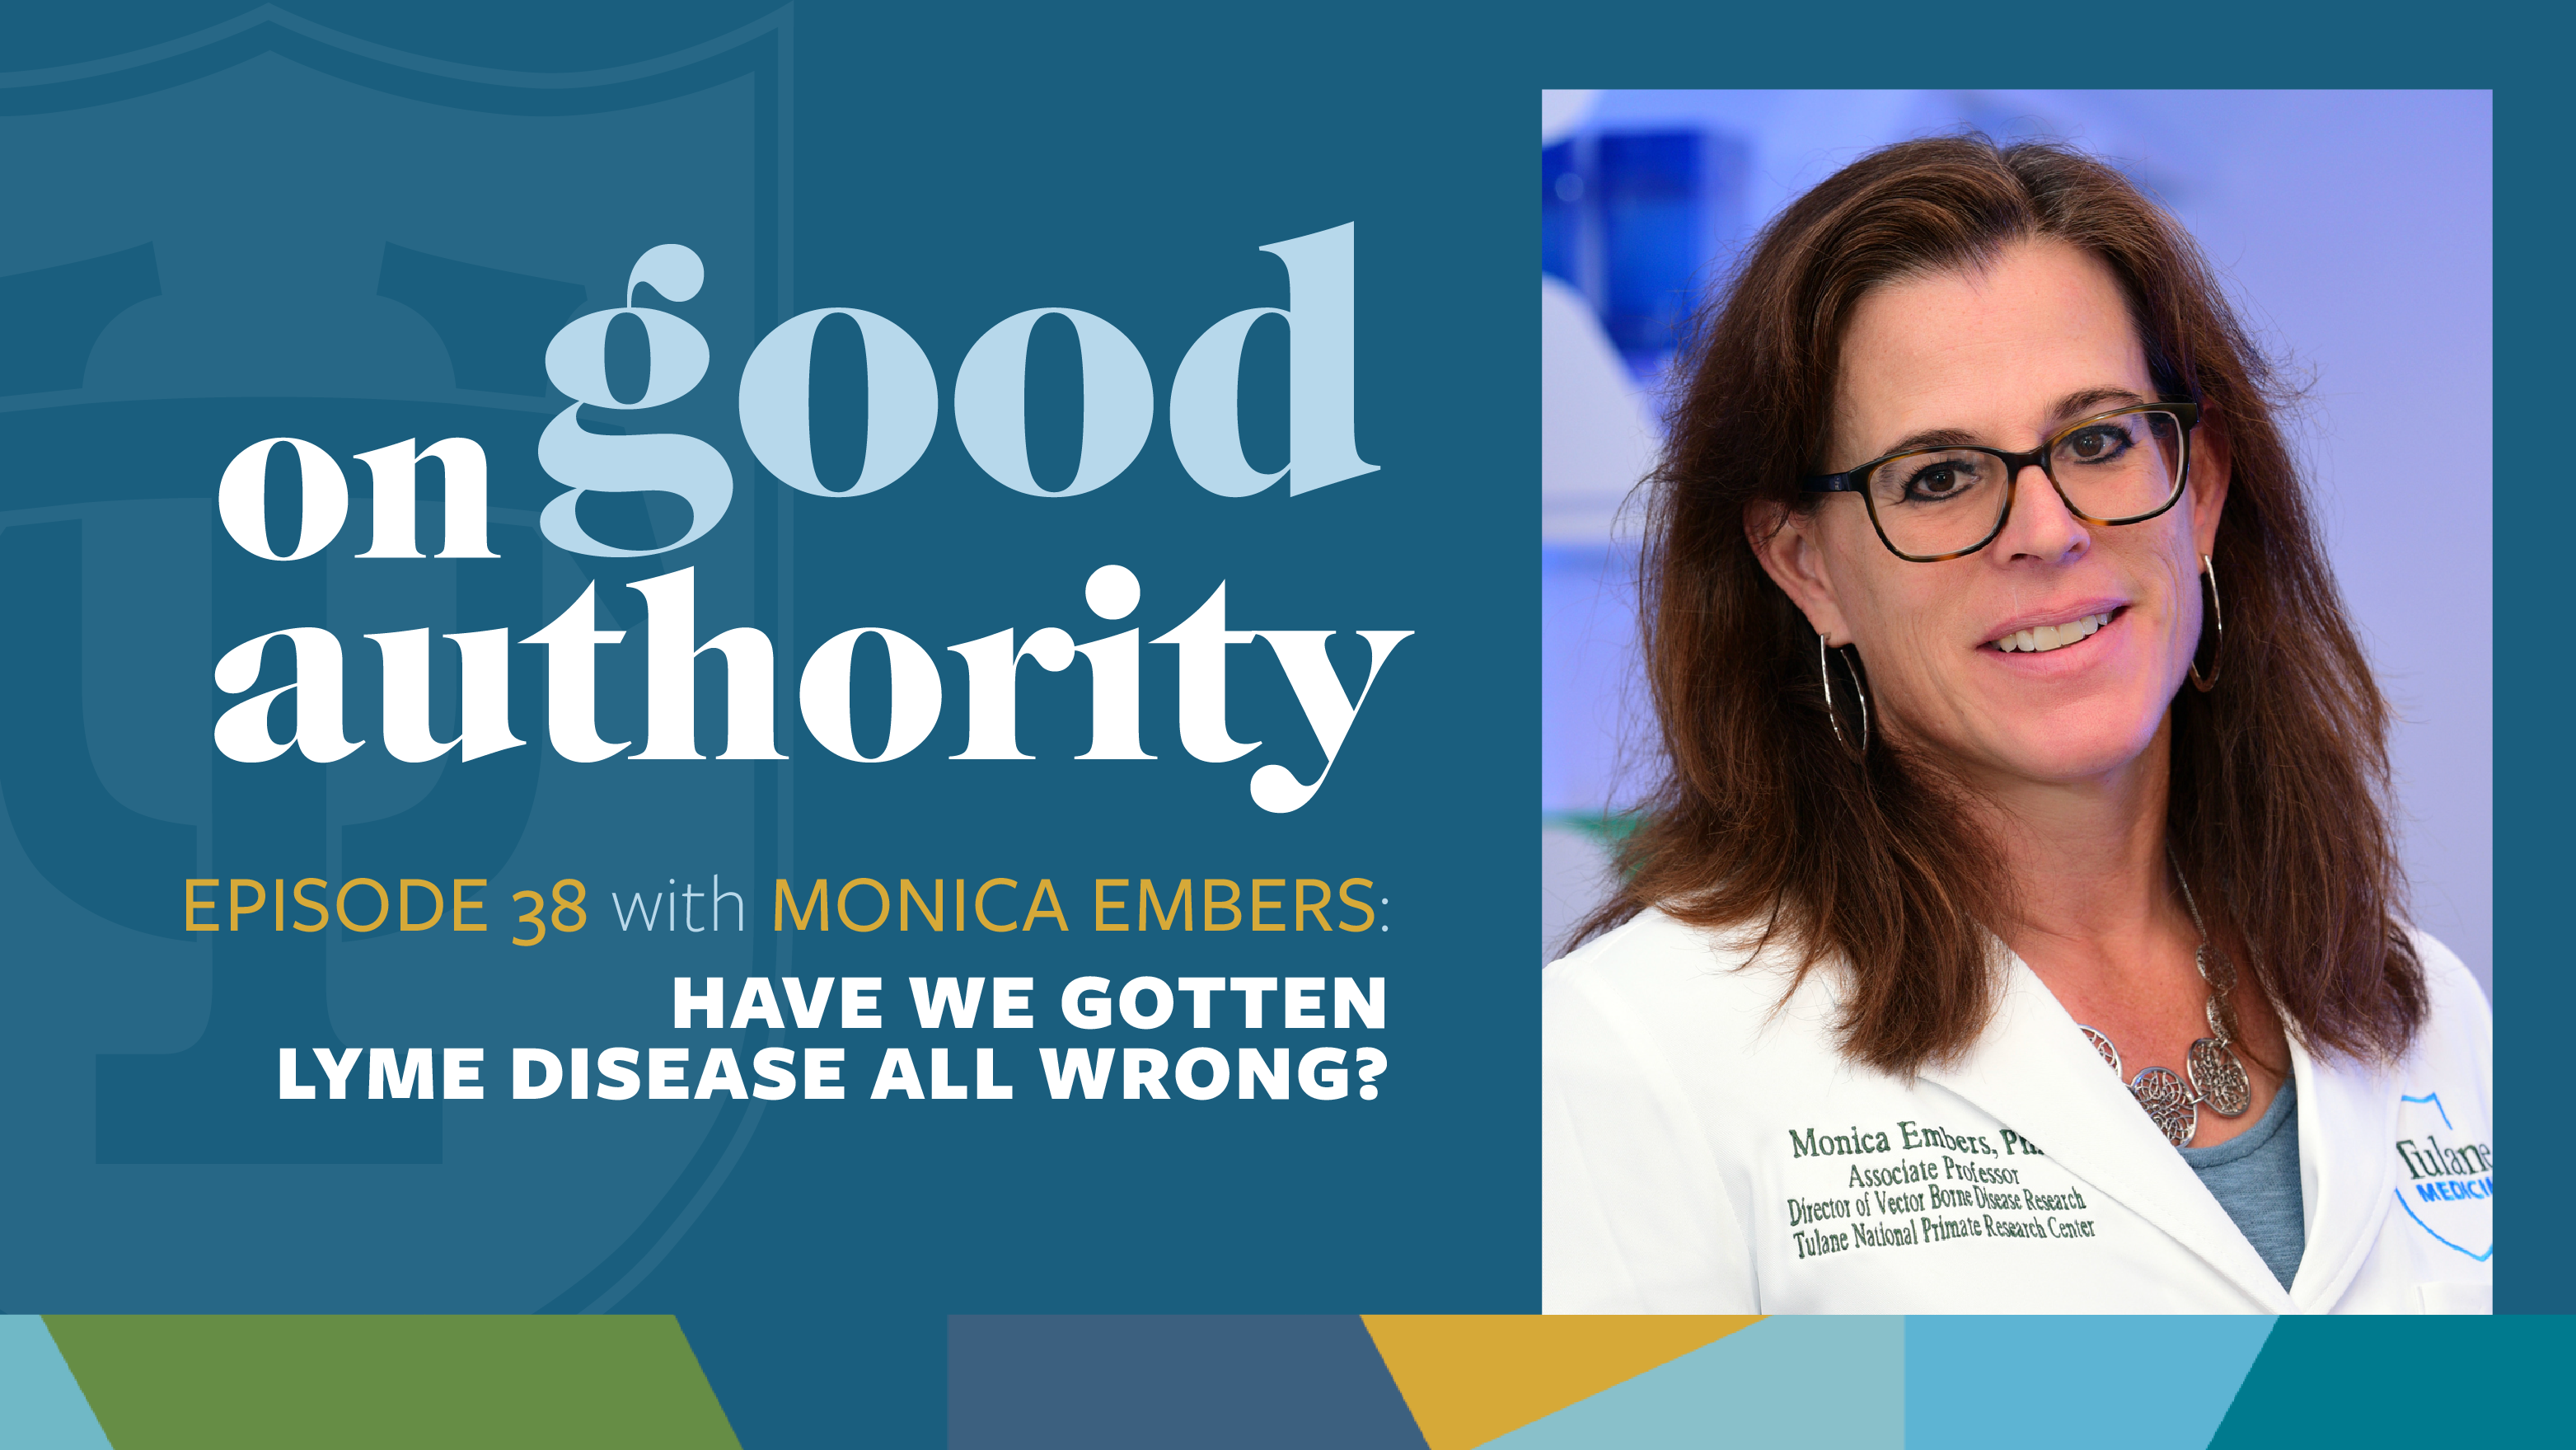 On Good Authority Episode 38 – Photo of Monica Embers